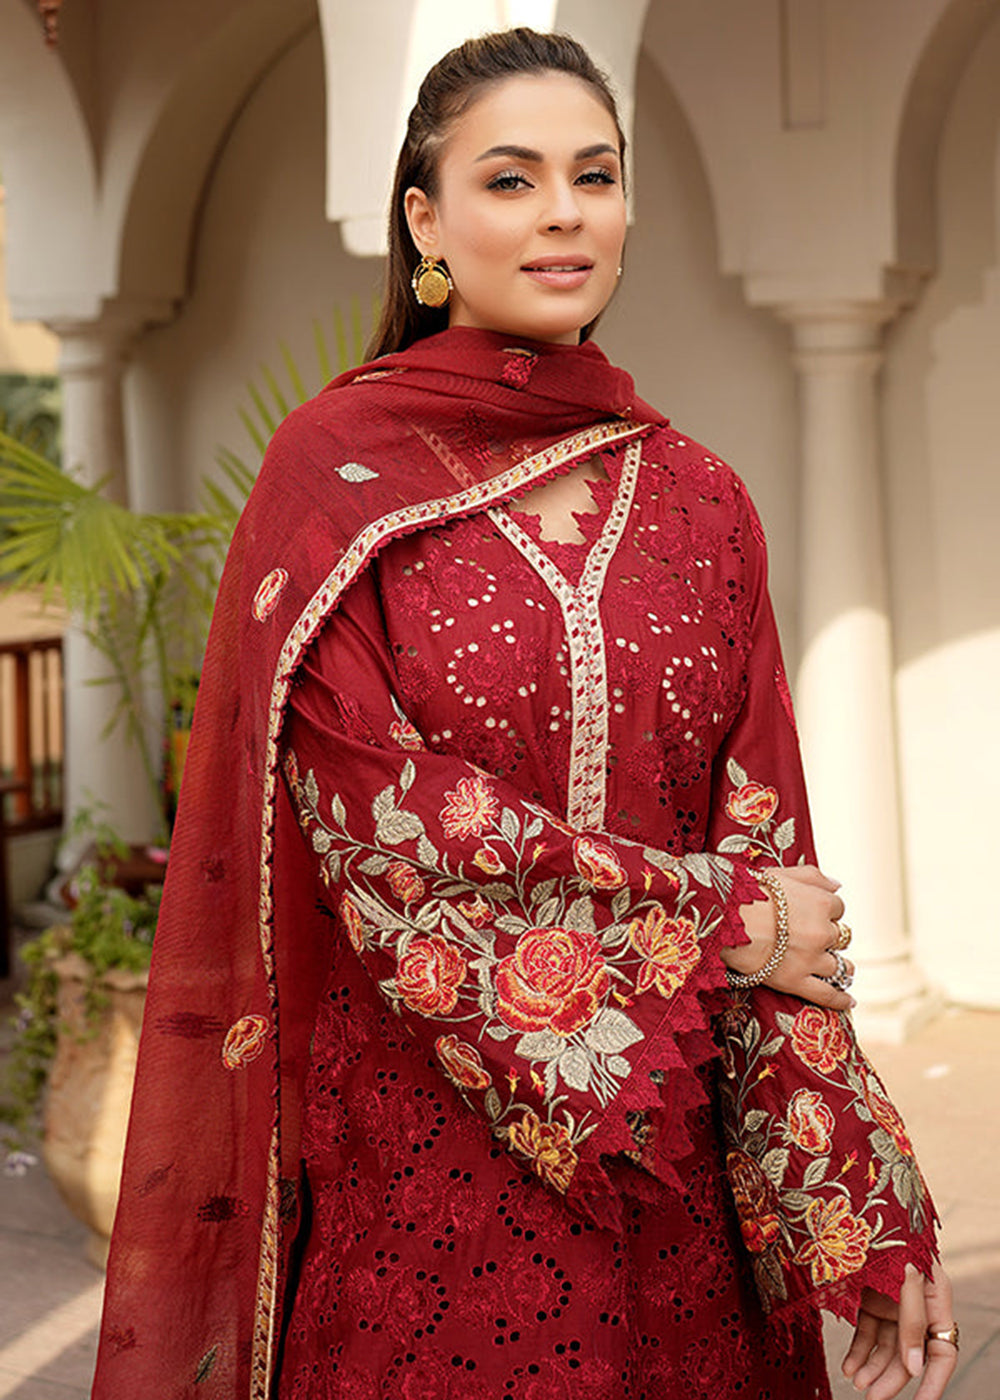 Buy Now Red Lawn Dress - Bahaar Luxury Lawn by Mariyam's - Leelah B-1012 Online in USA, UK, Canada & Worldwide at Empress Clothing.